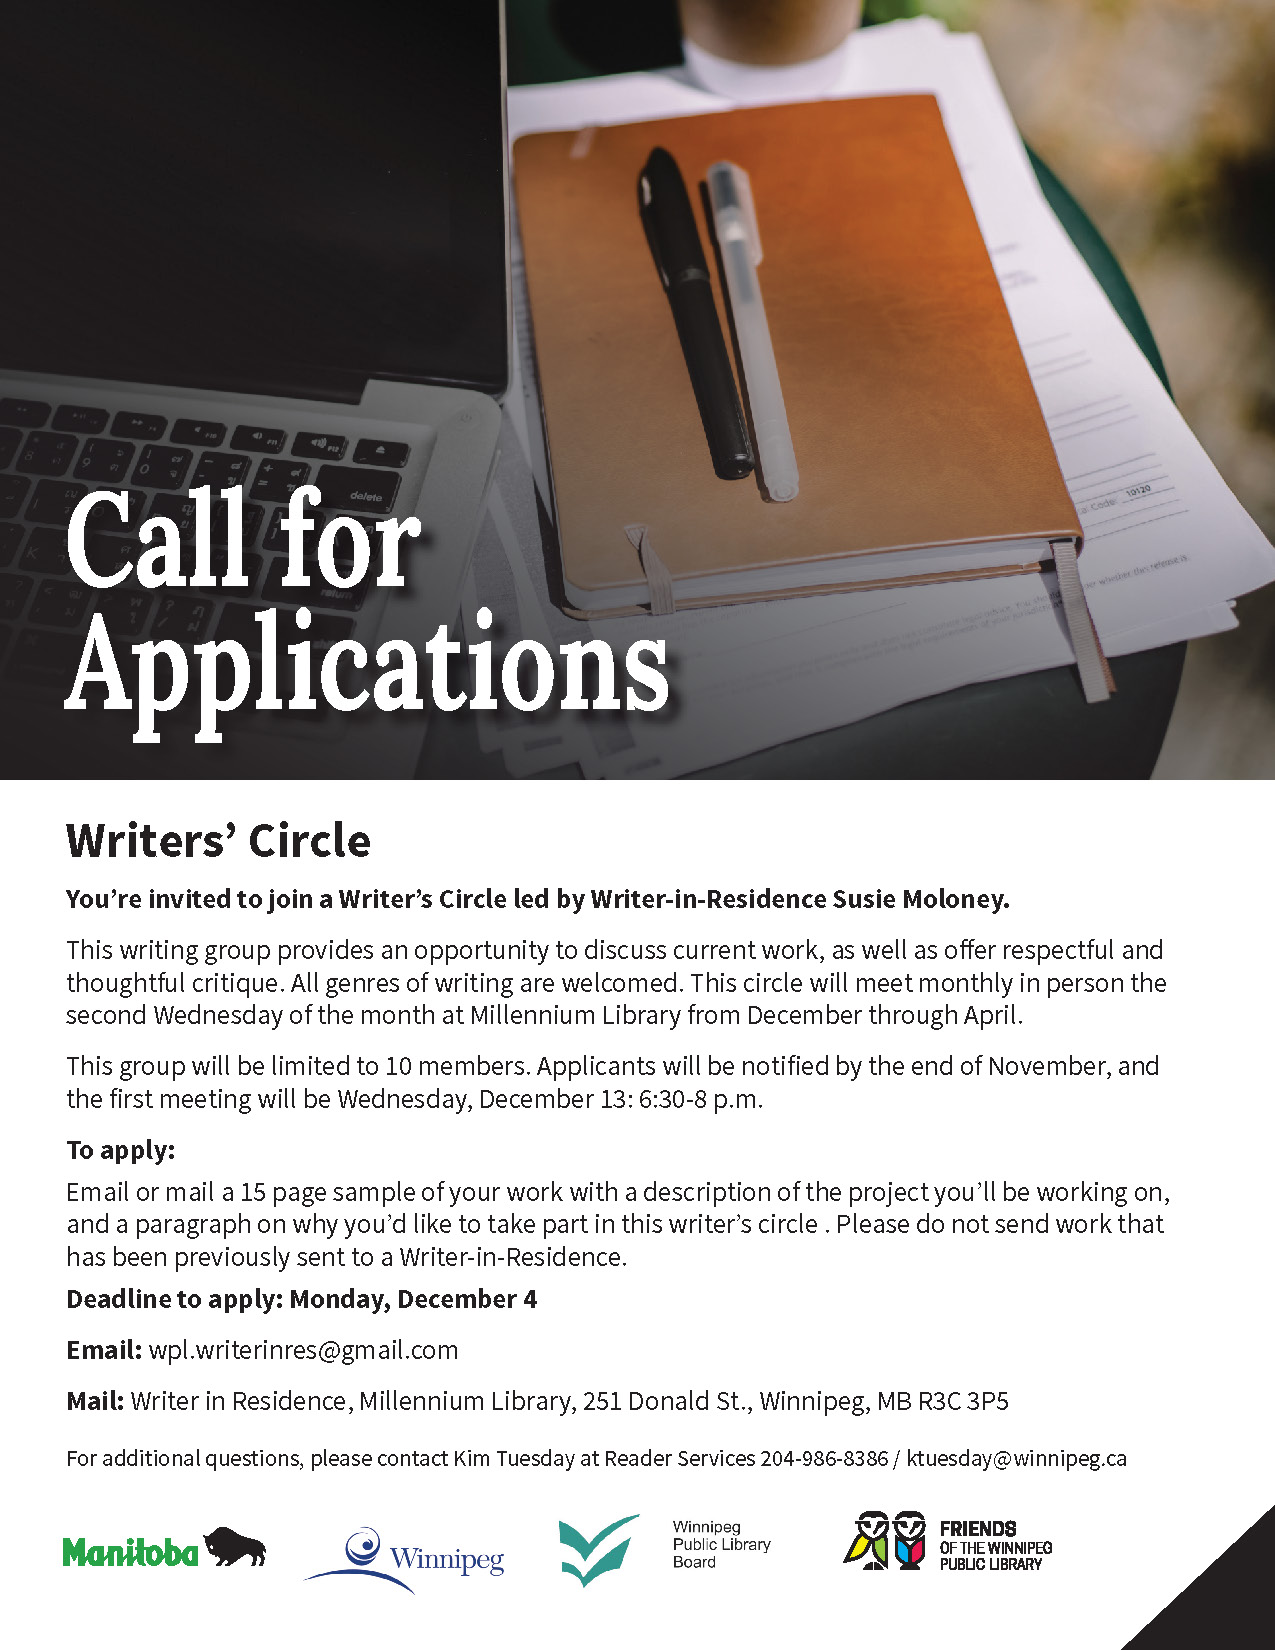 Writer's Circle Applications December 4 deadline